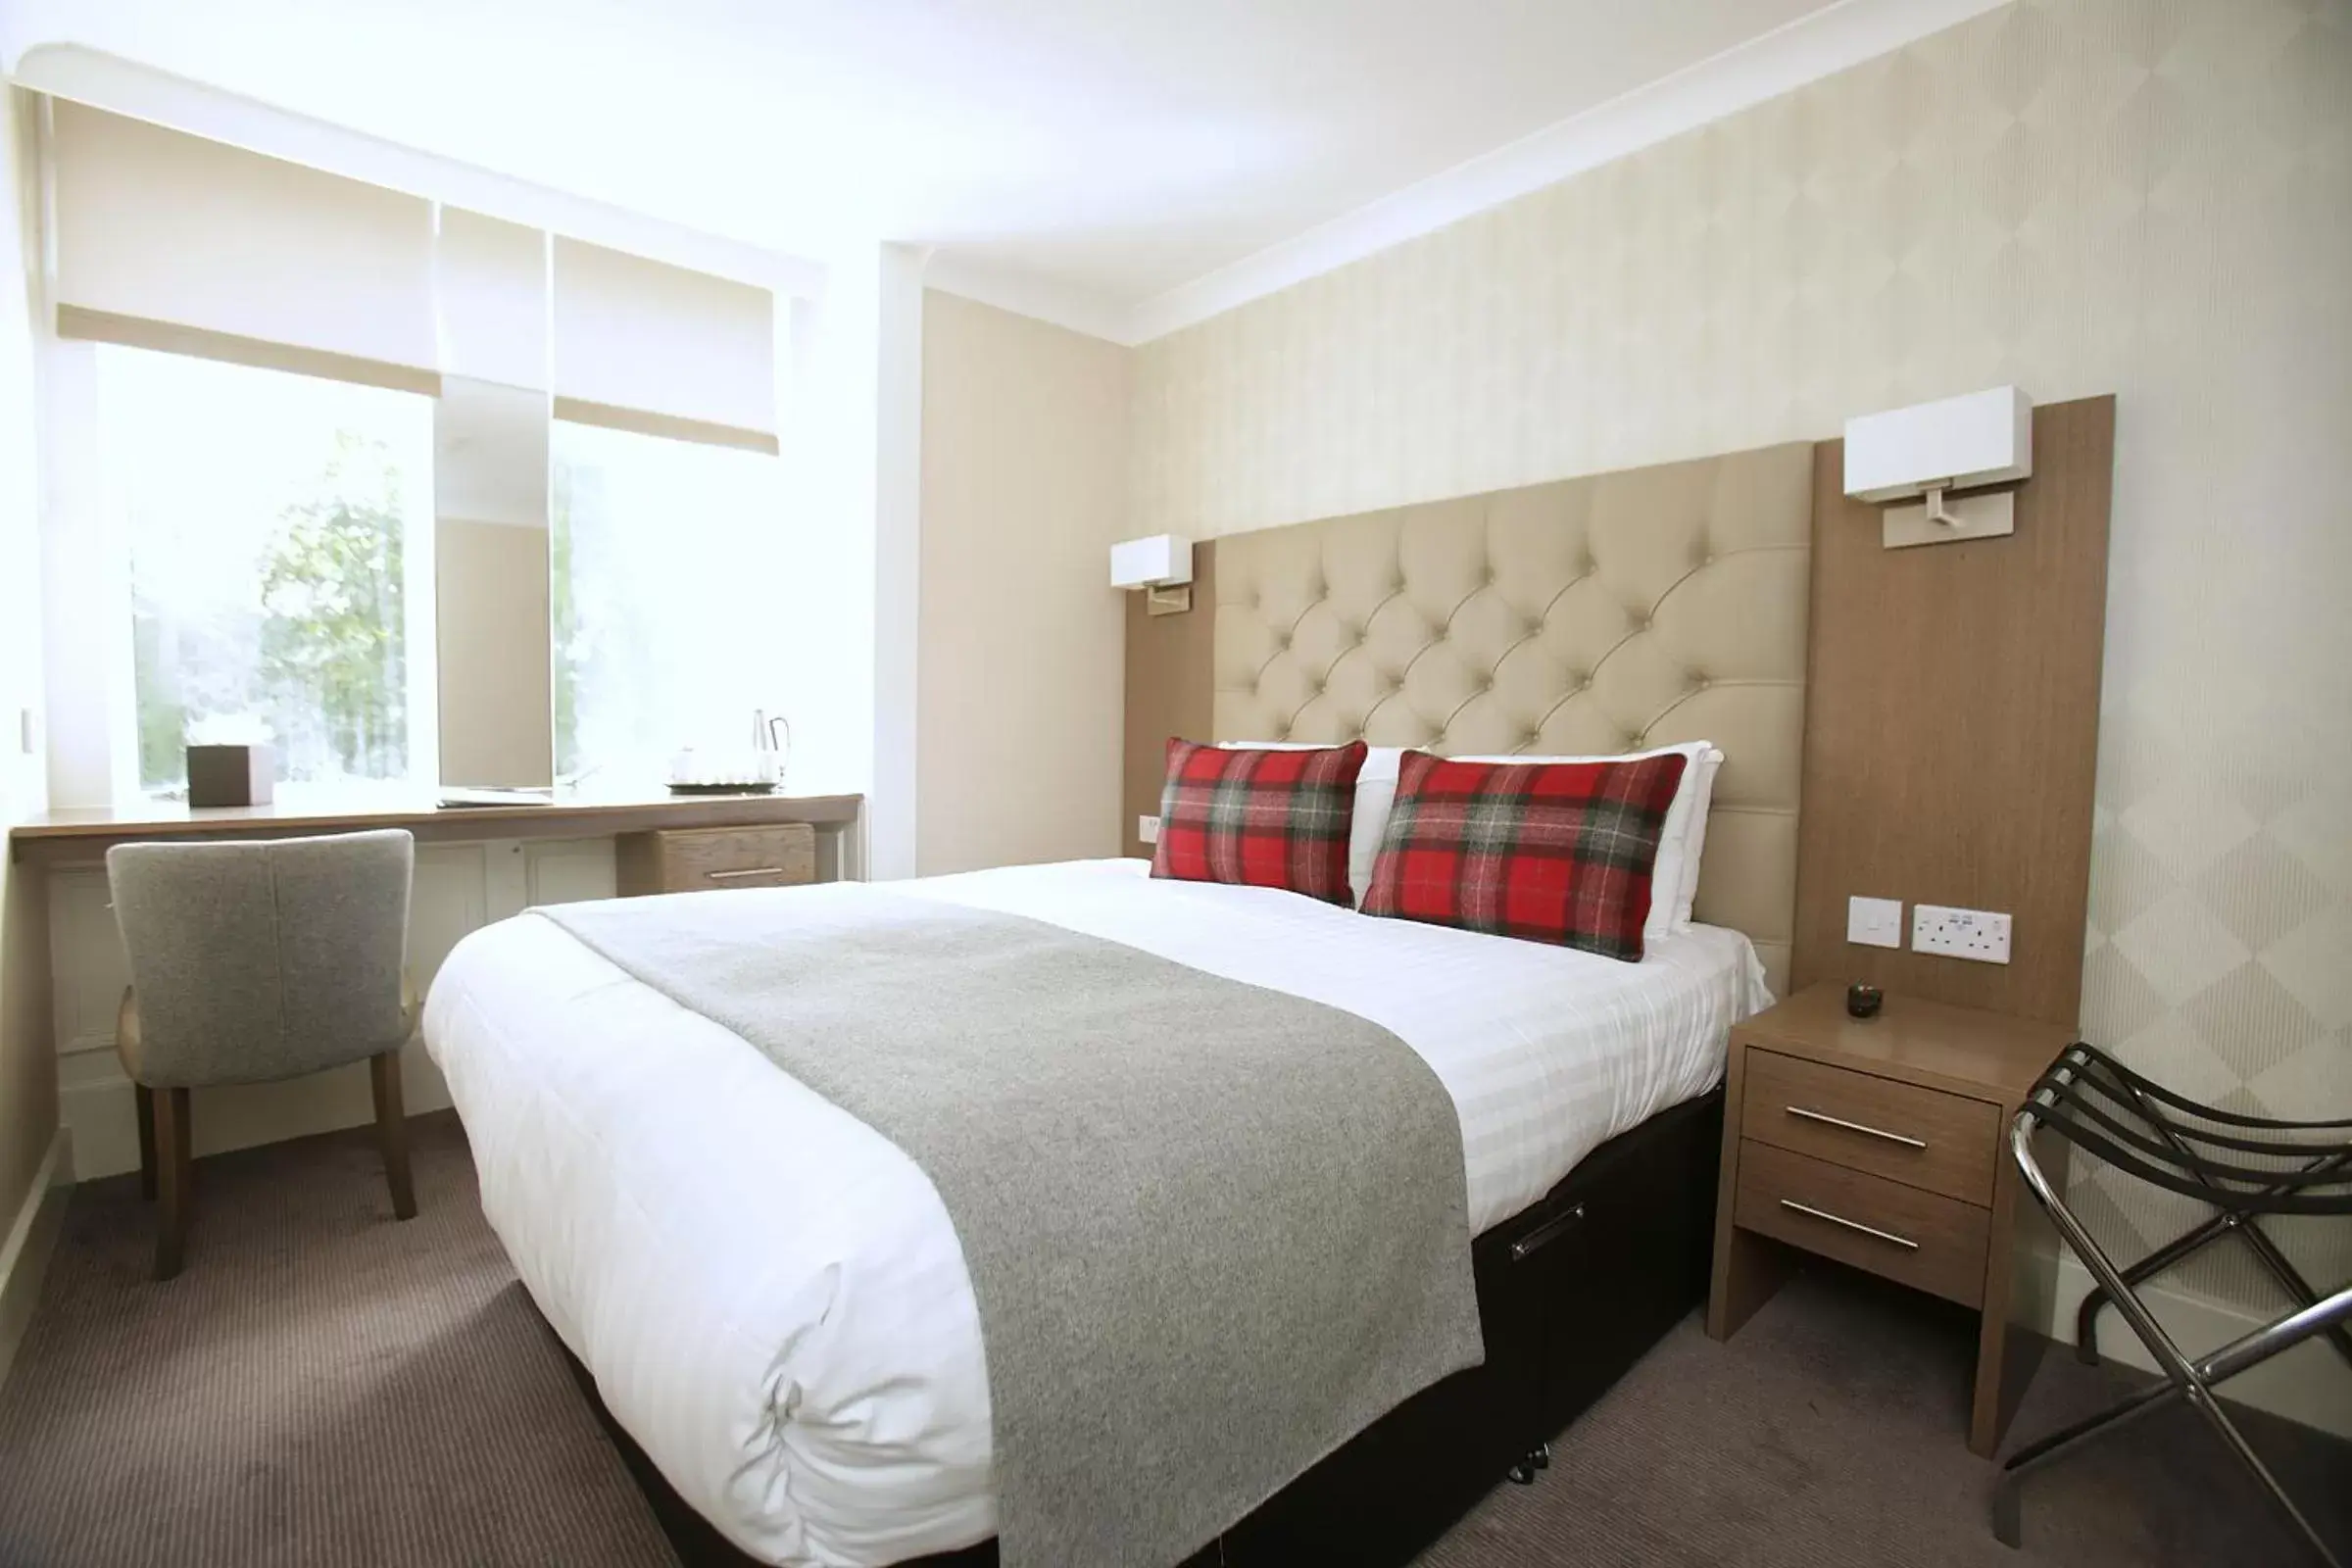 Bed, Room Photo in Ambassador Hotel